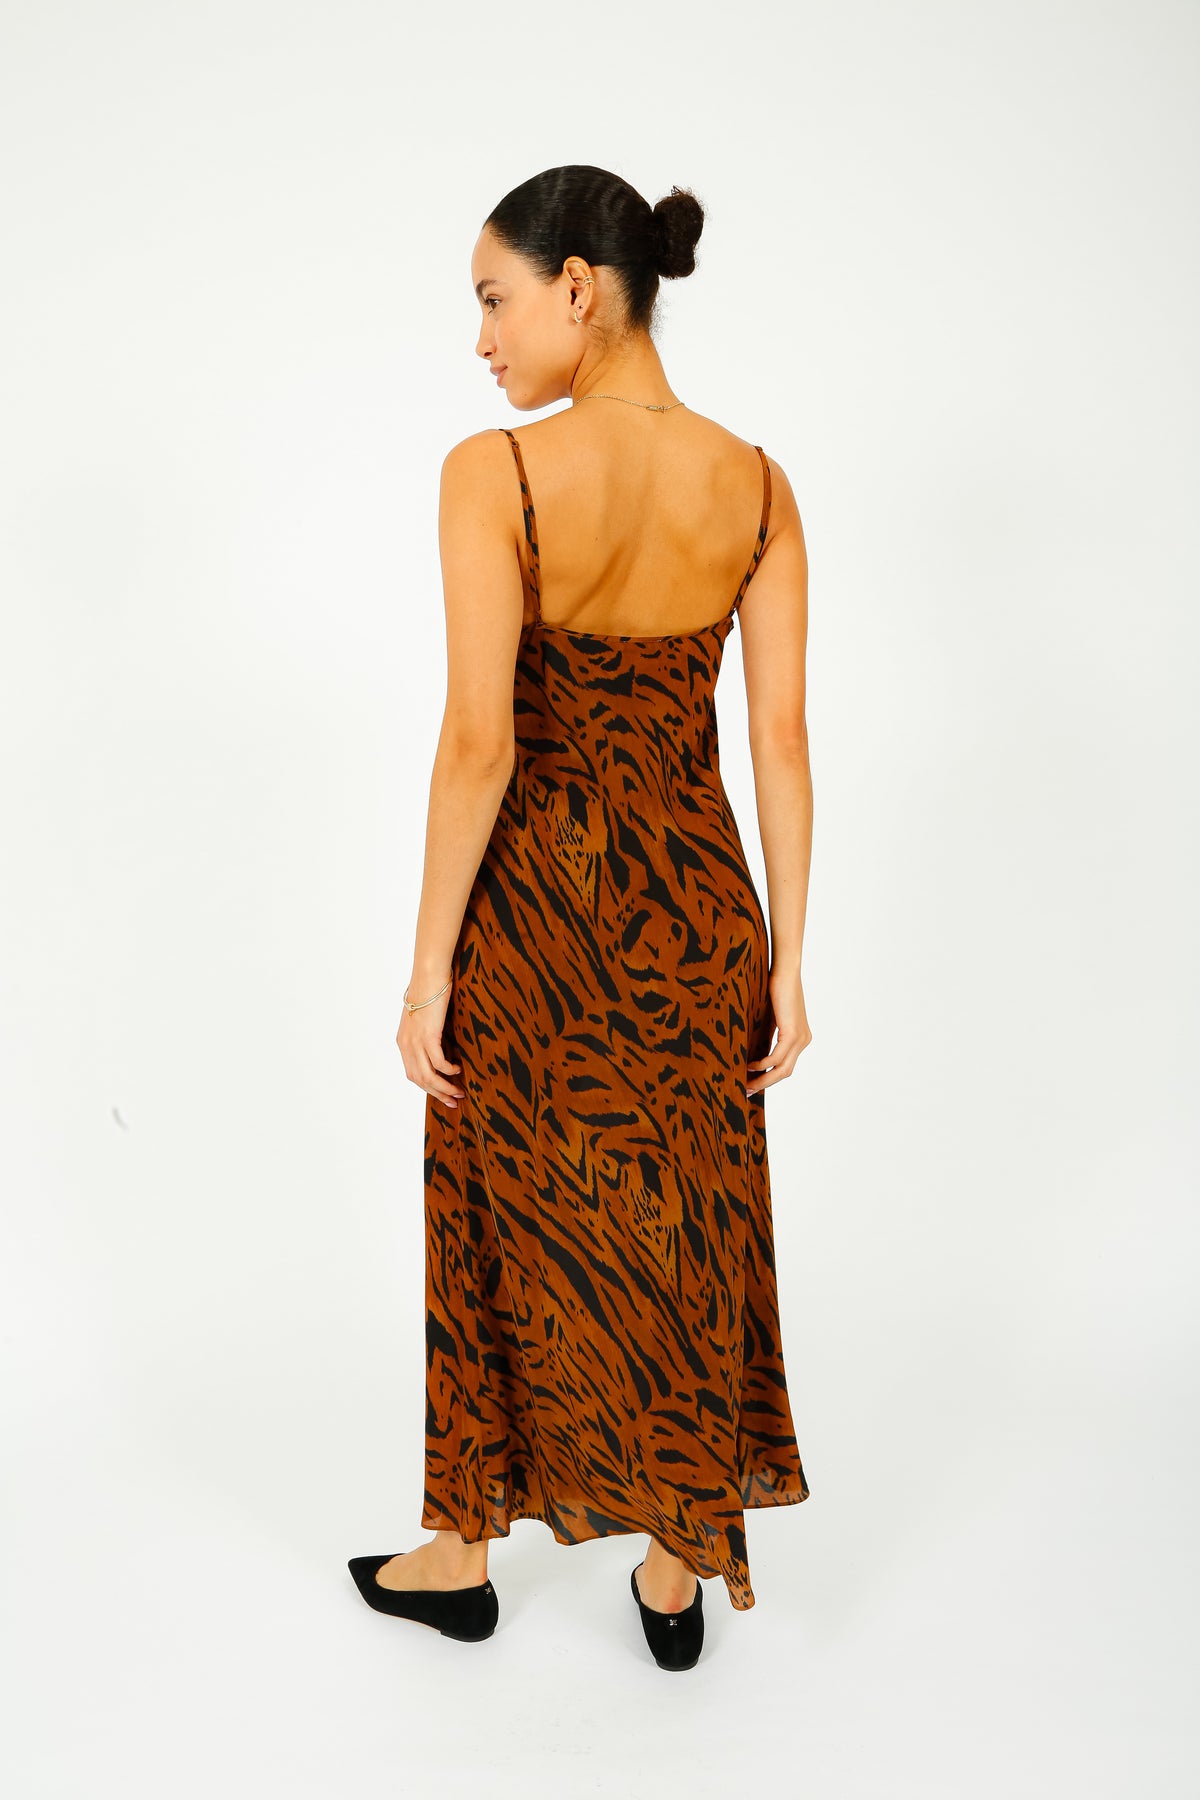 RIXO Holly Dress in Tiger Stripe